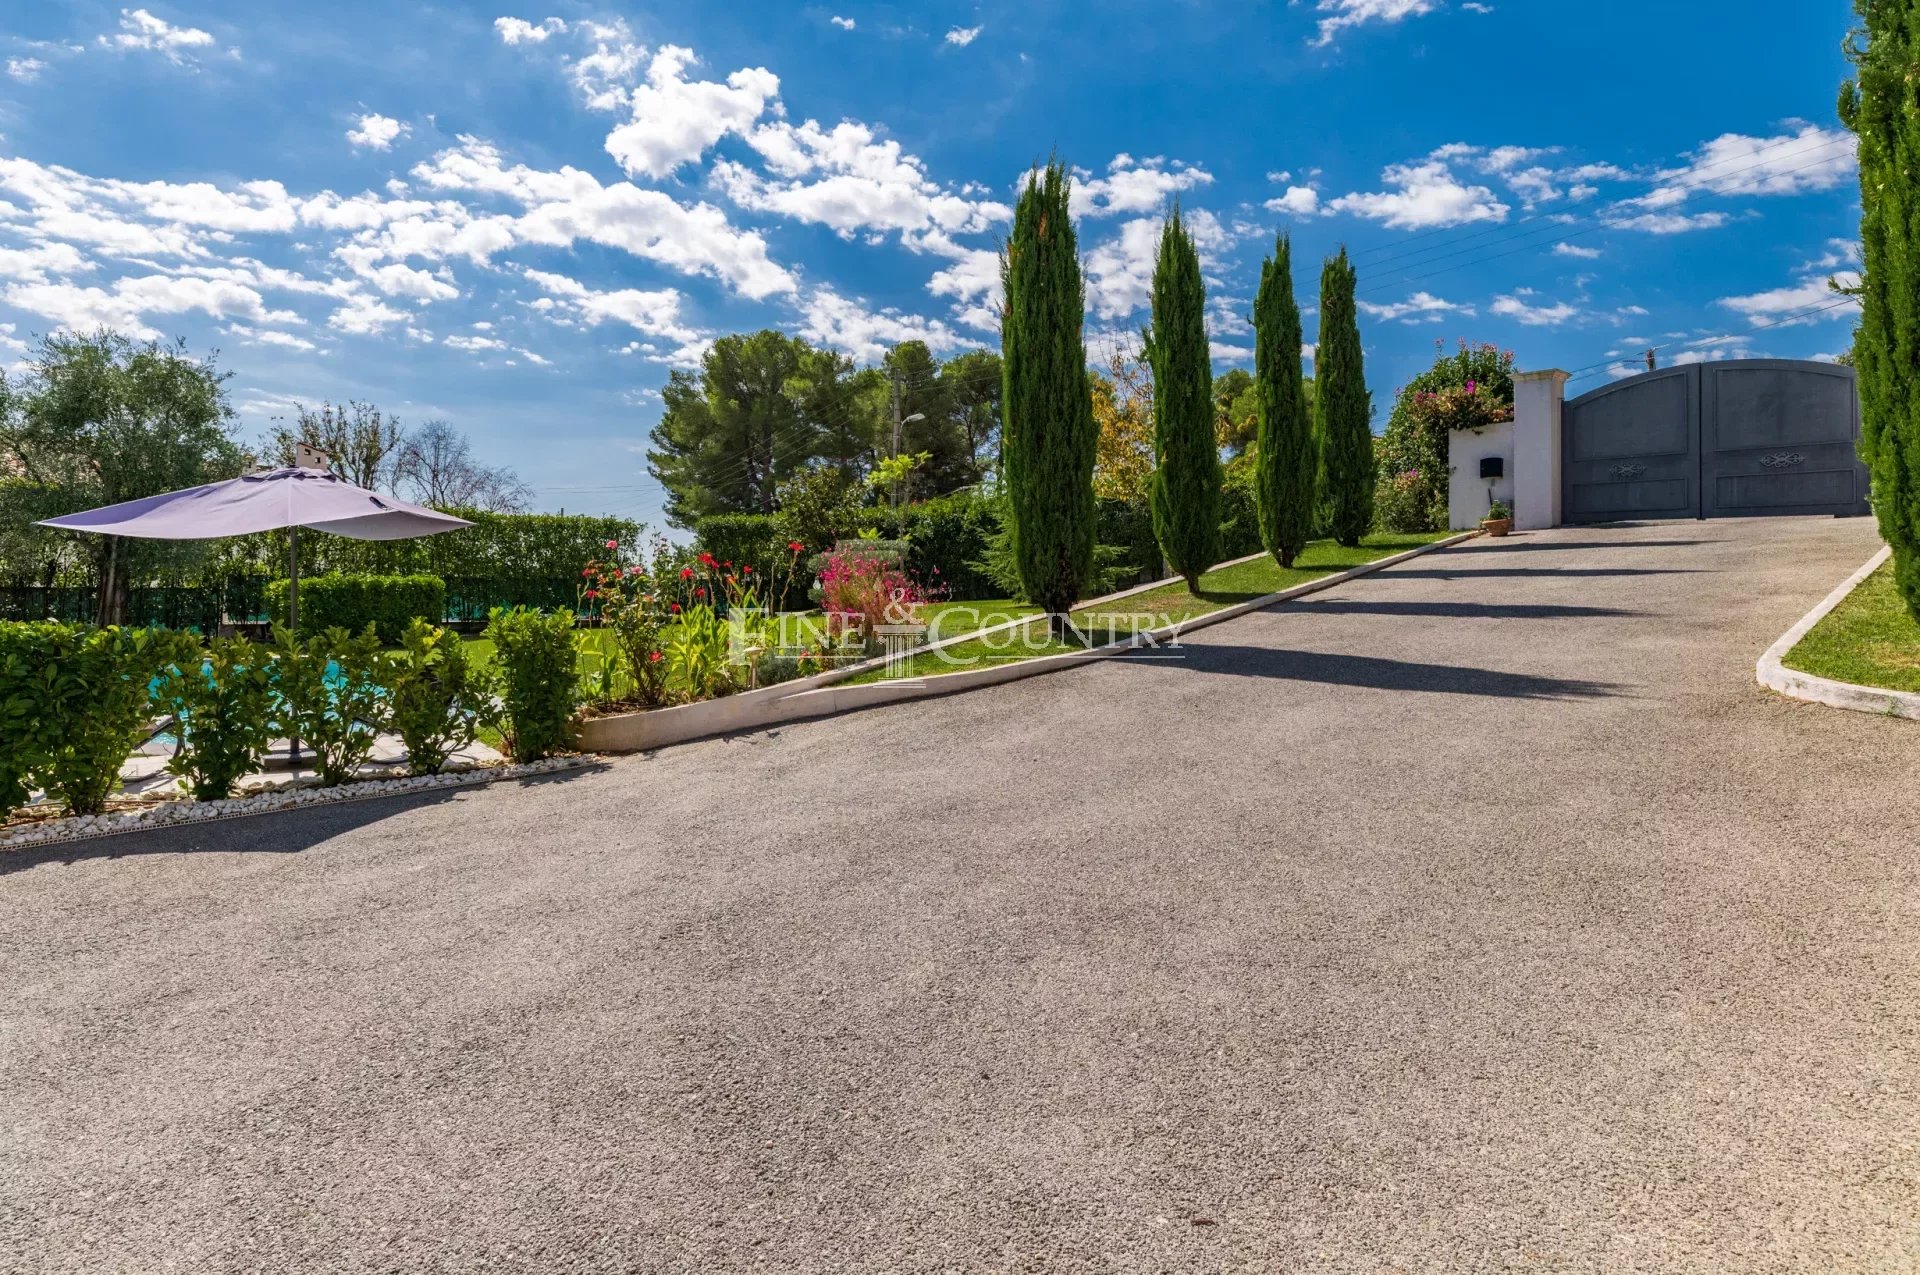 Photo of Villa for sale in Saint Paul de Vence near village